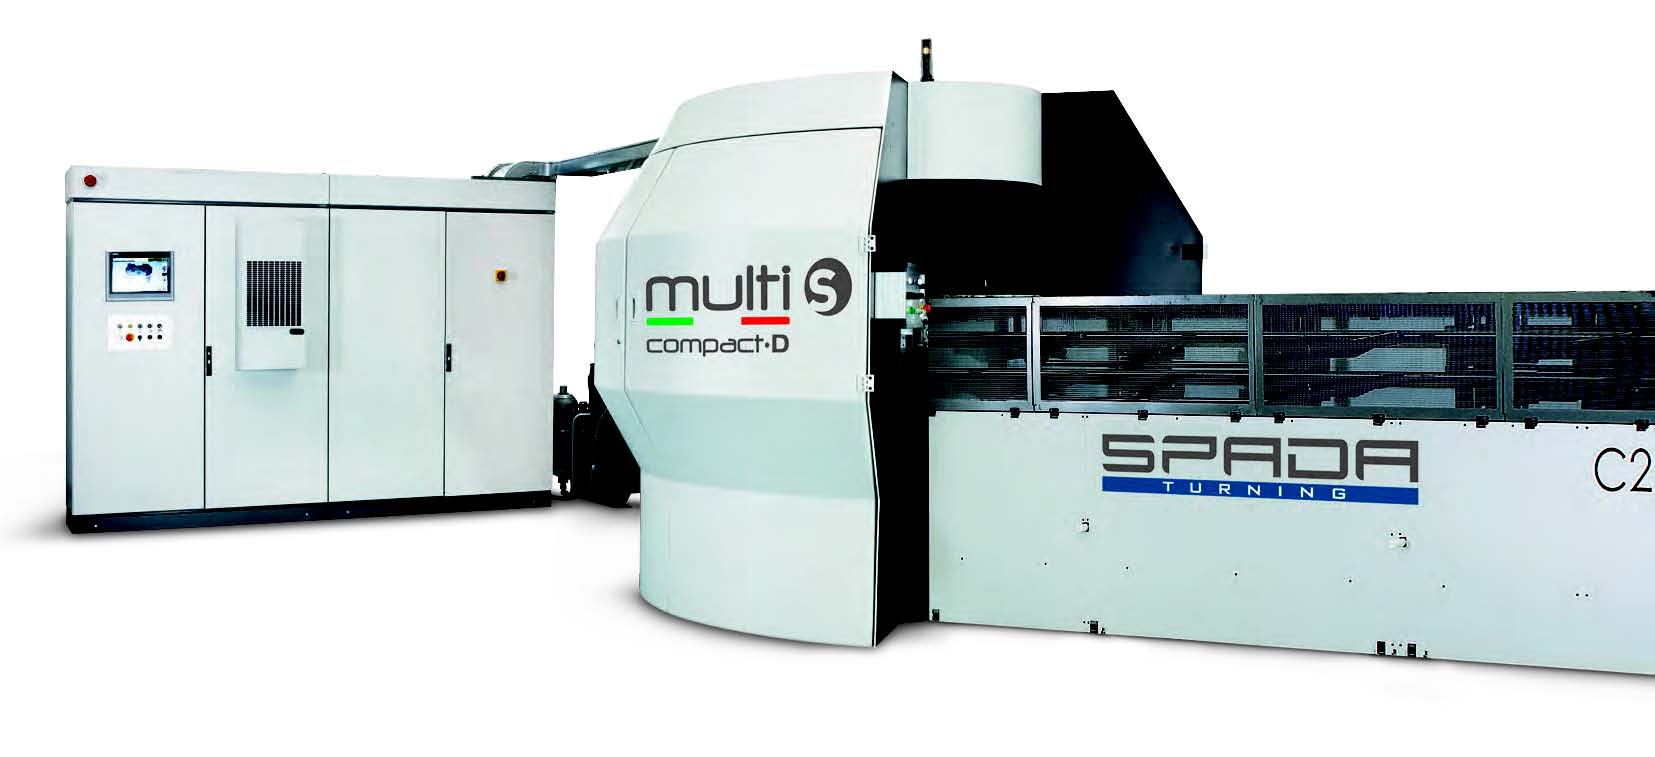 MultiS compactD 300x137 1